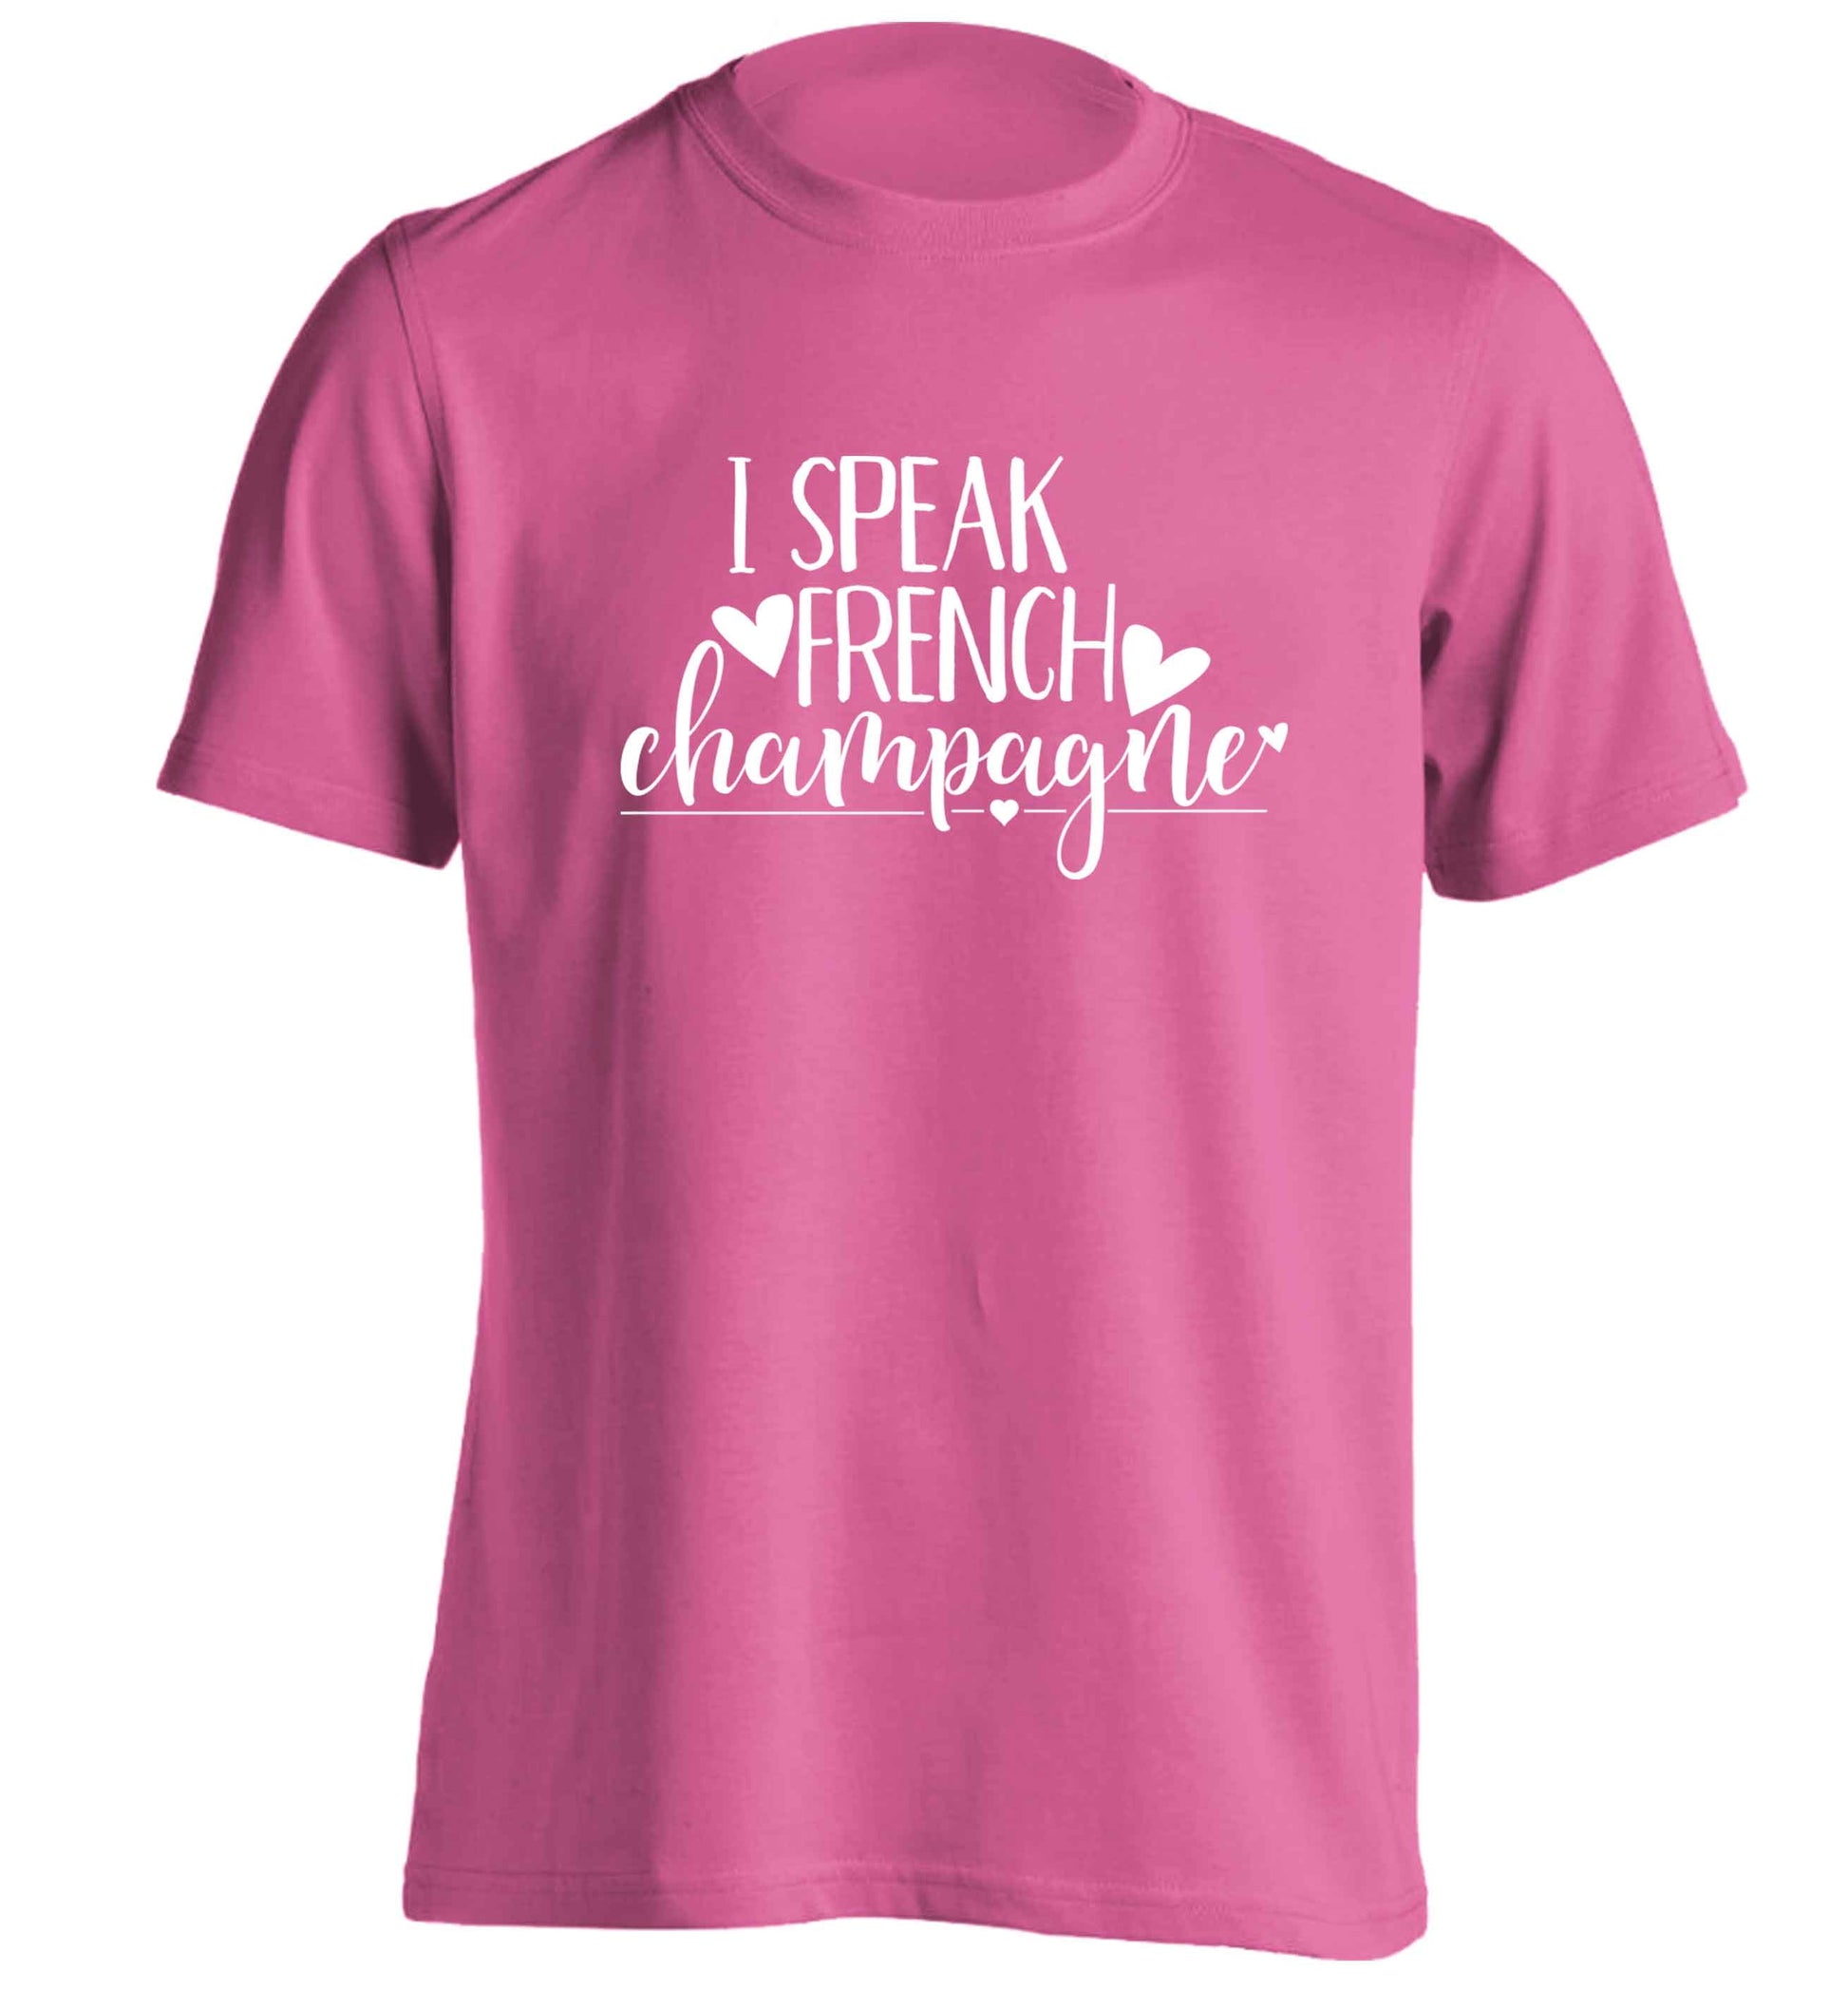 I speak french champagne adults unisex pink Tshirt 2XL